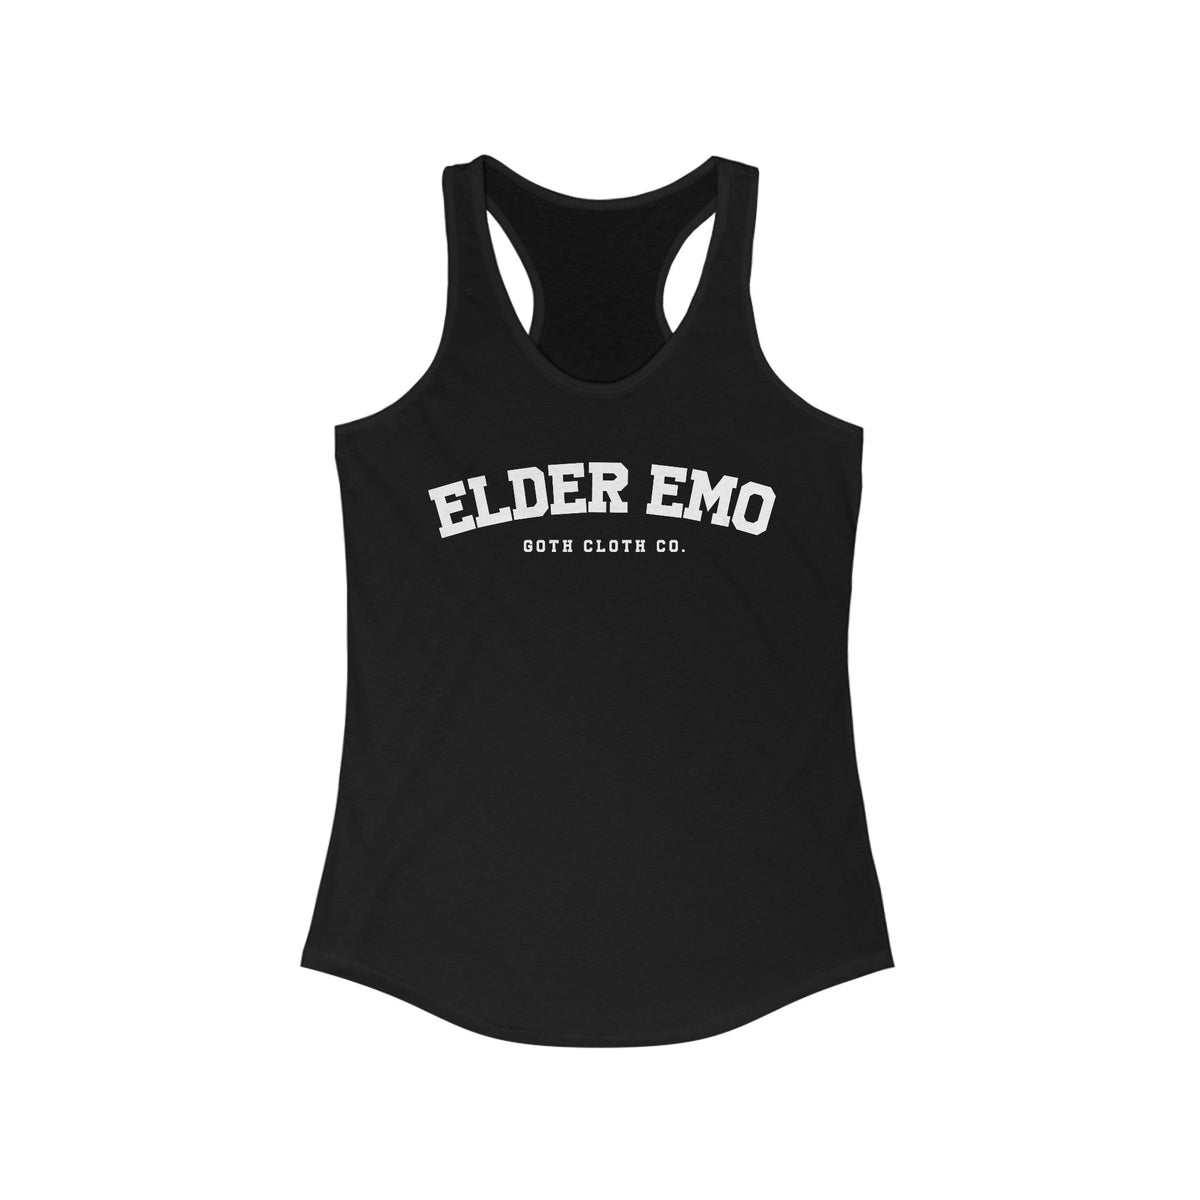 Elder Emo College Women's Racerback Tank - Goth Cloth Co.Tank Top82292218700373023372